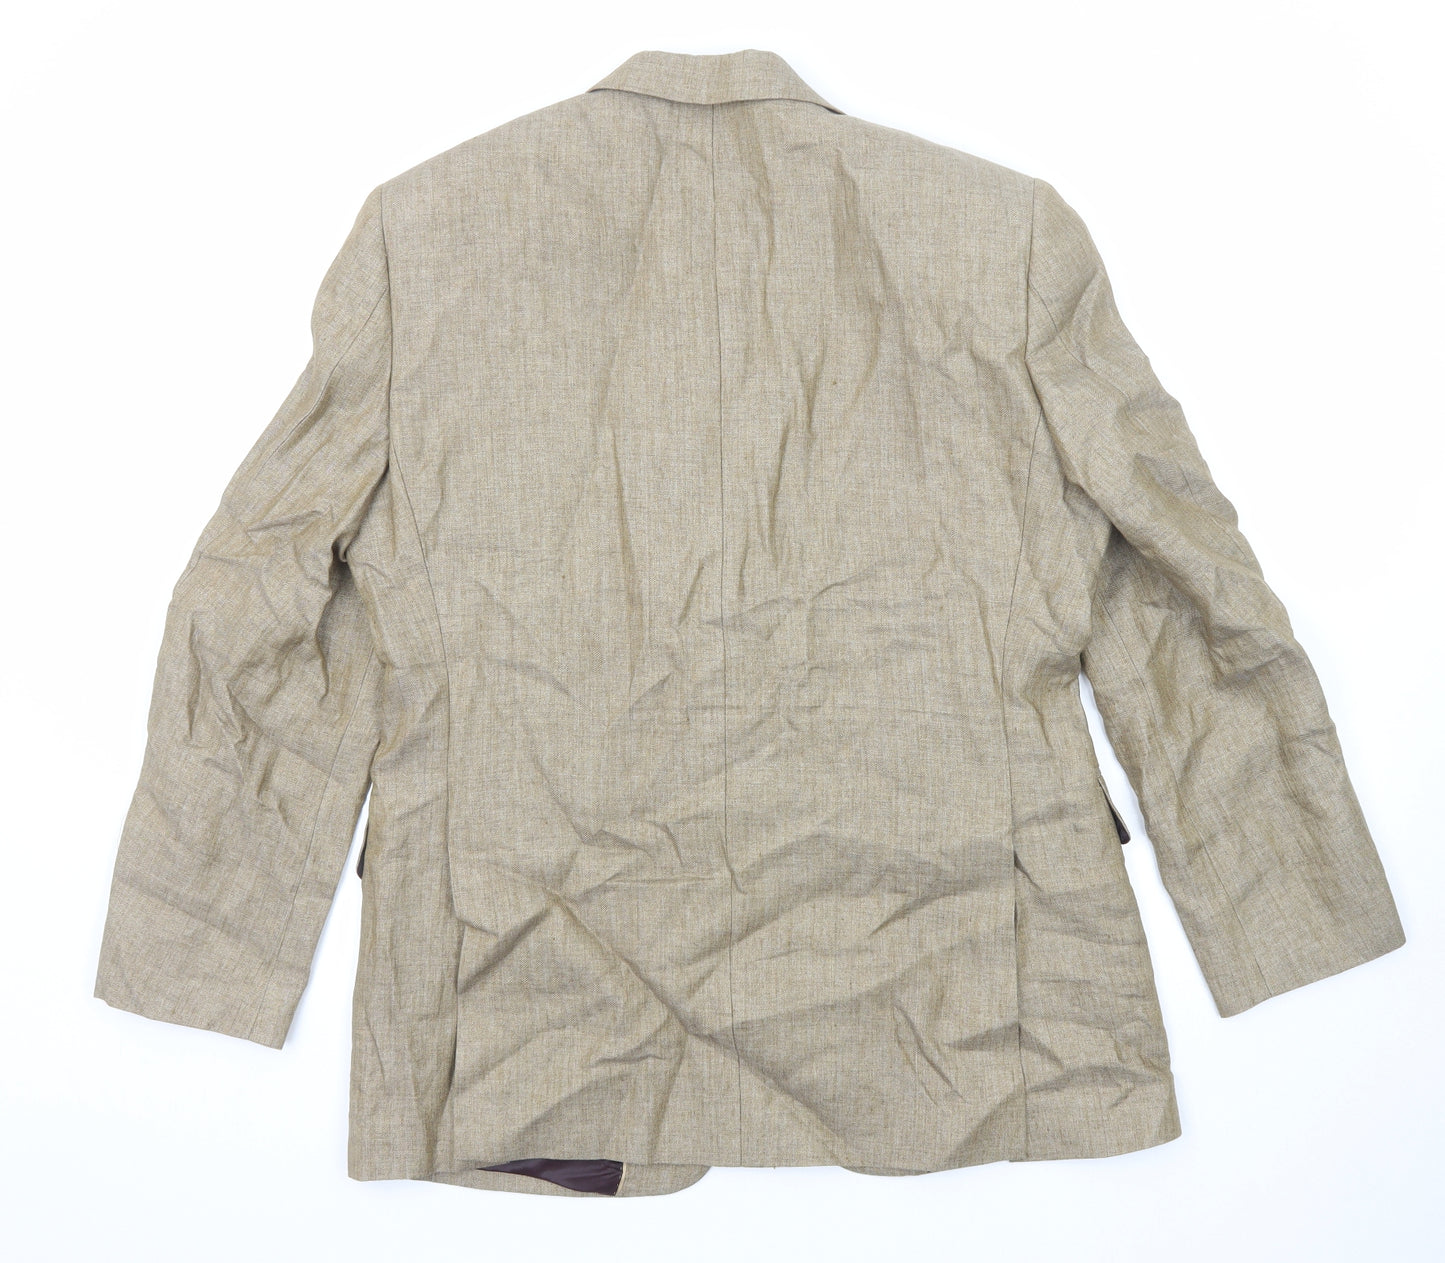 Chester Barrie Mens Beige Linen Jacket Blazer Size 38 Regular